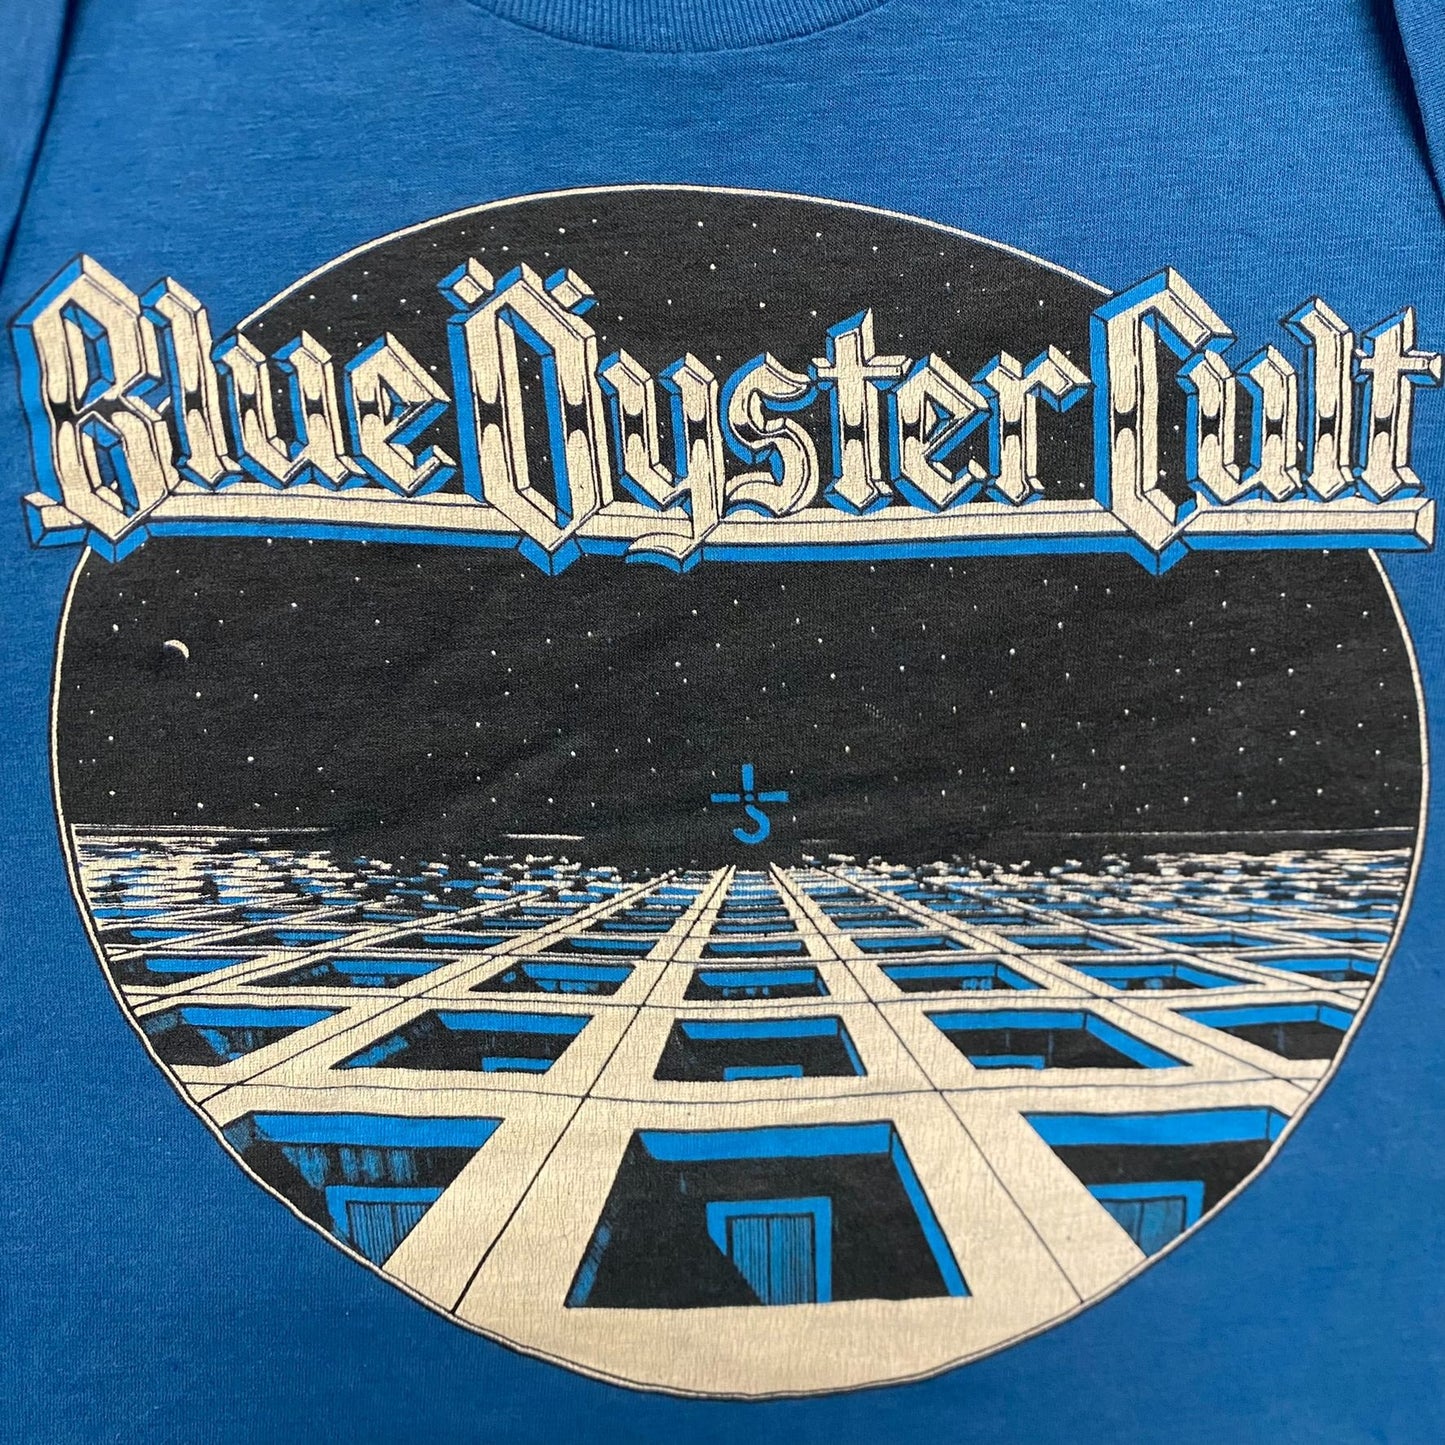 Vintage 80s Blue Oyster Cult Single Stitch Rock Band T-Shirt